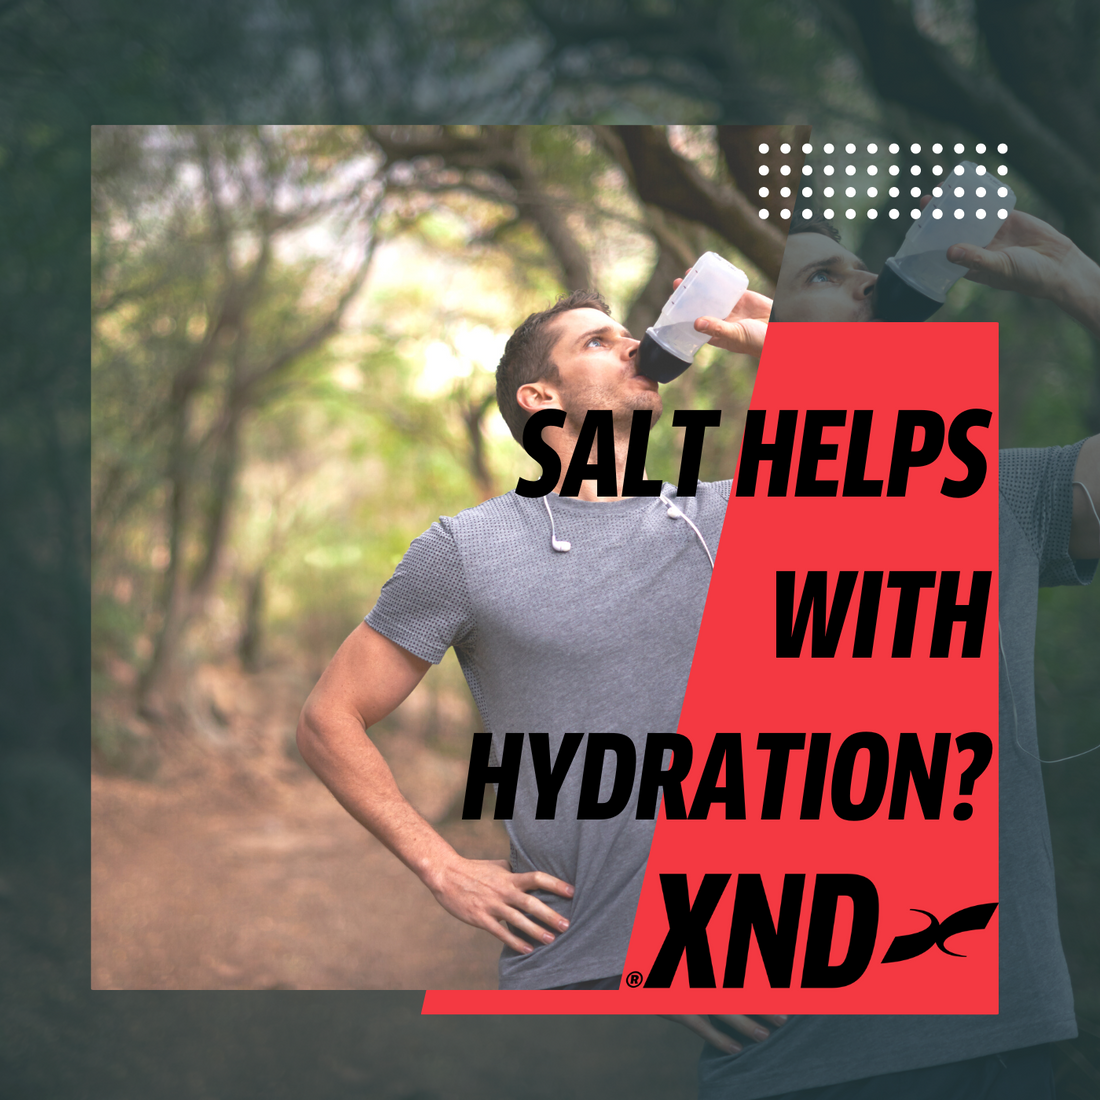 Salt helps with hydration?